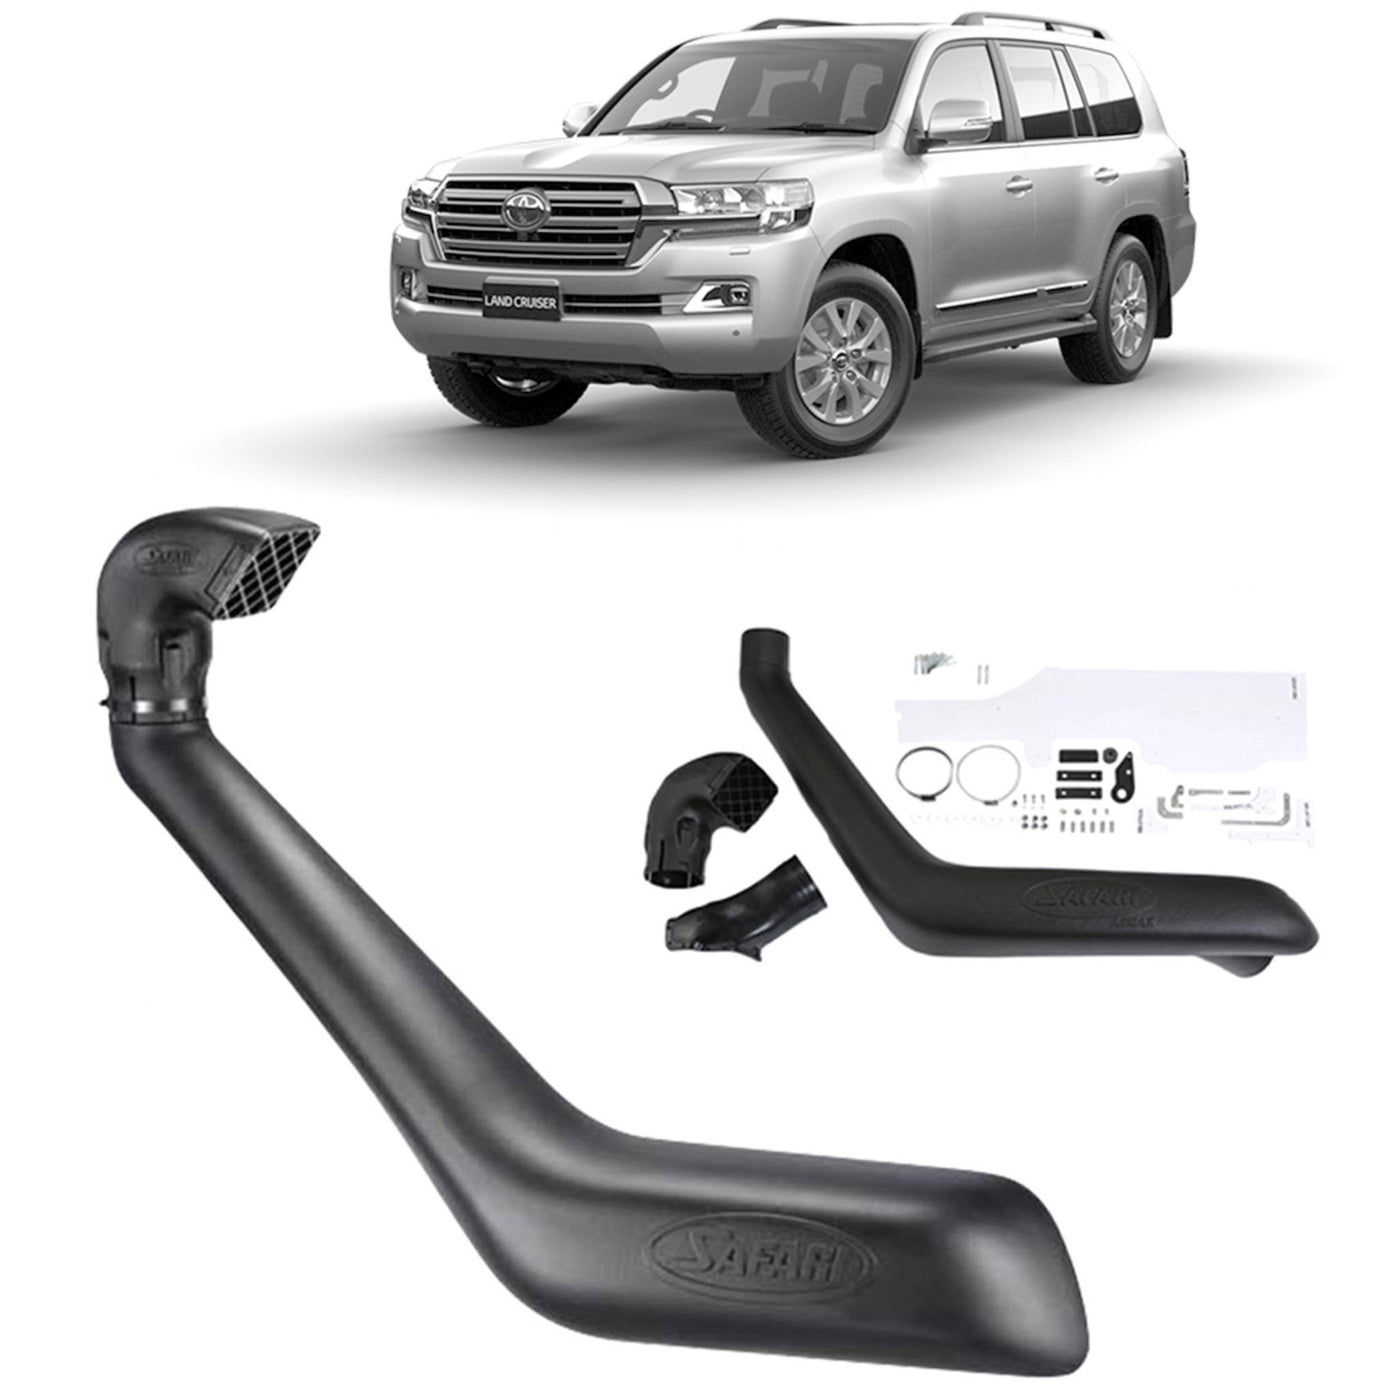 Safari Snorkel Suitable For Toyota Landcruiser (10/2015 - on) - OZI4X4 PTY LTD